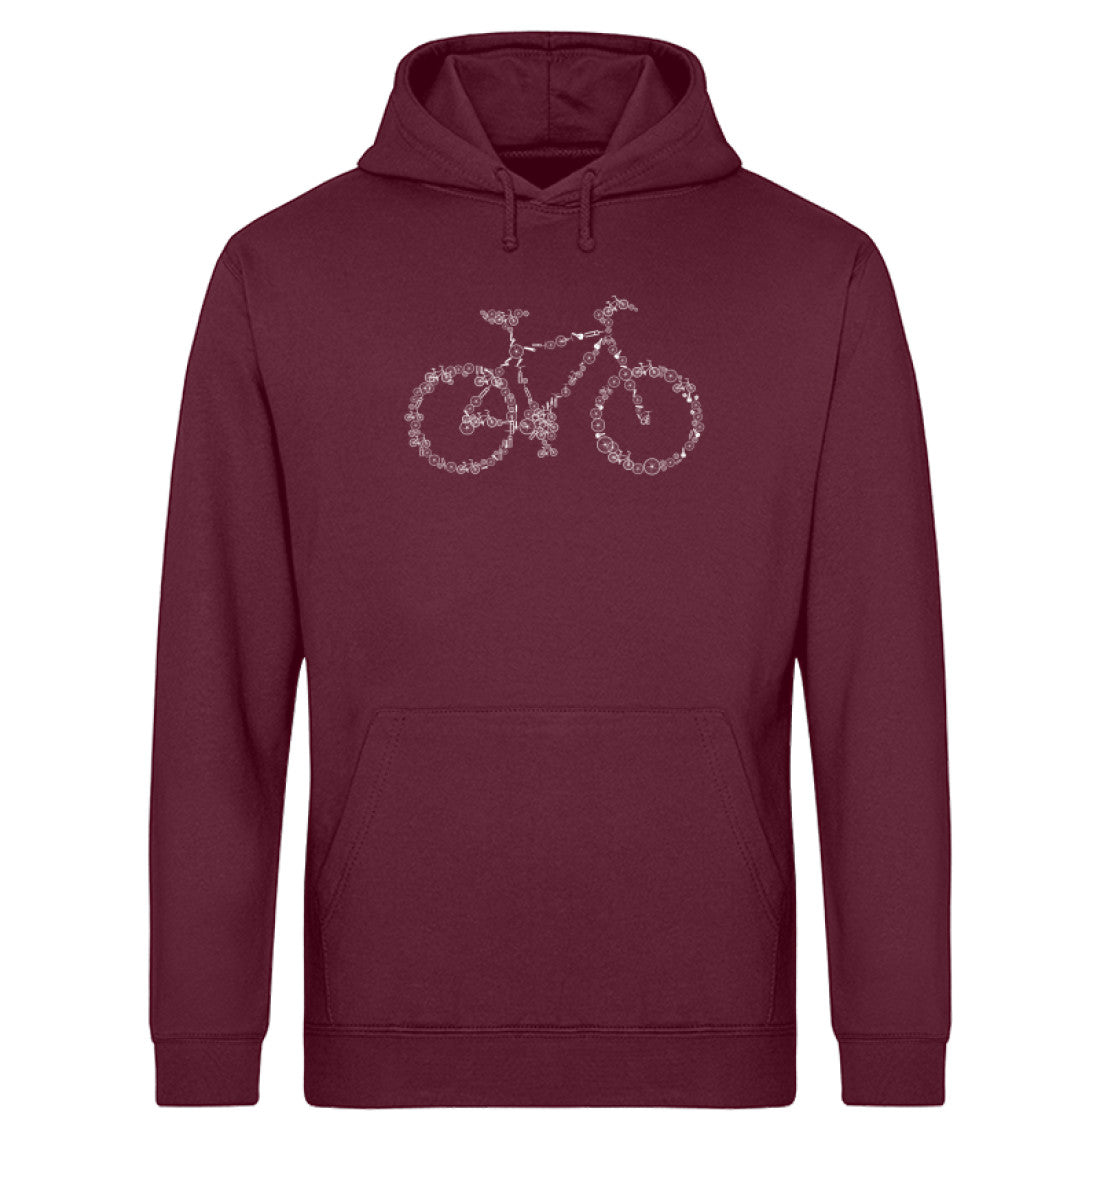 Fahrrad Kollektiv - Unisex Organic Hoodie fahrrad mountainbike Weinrot